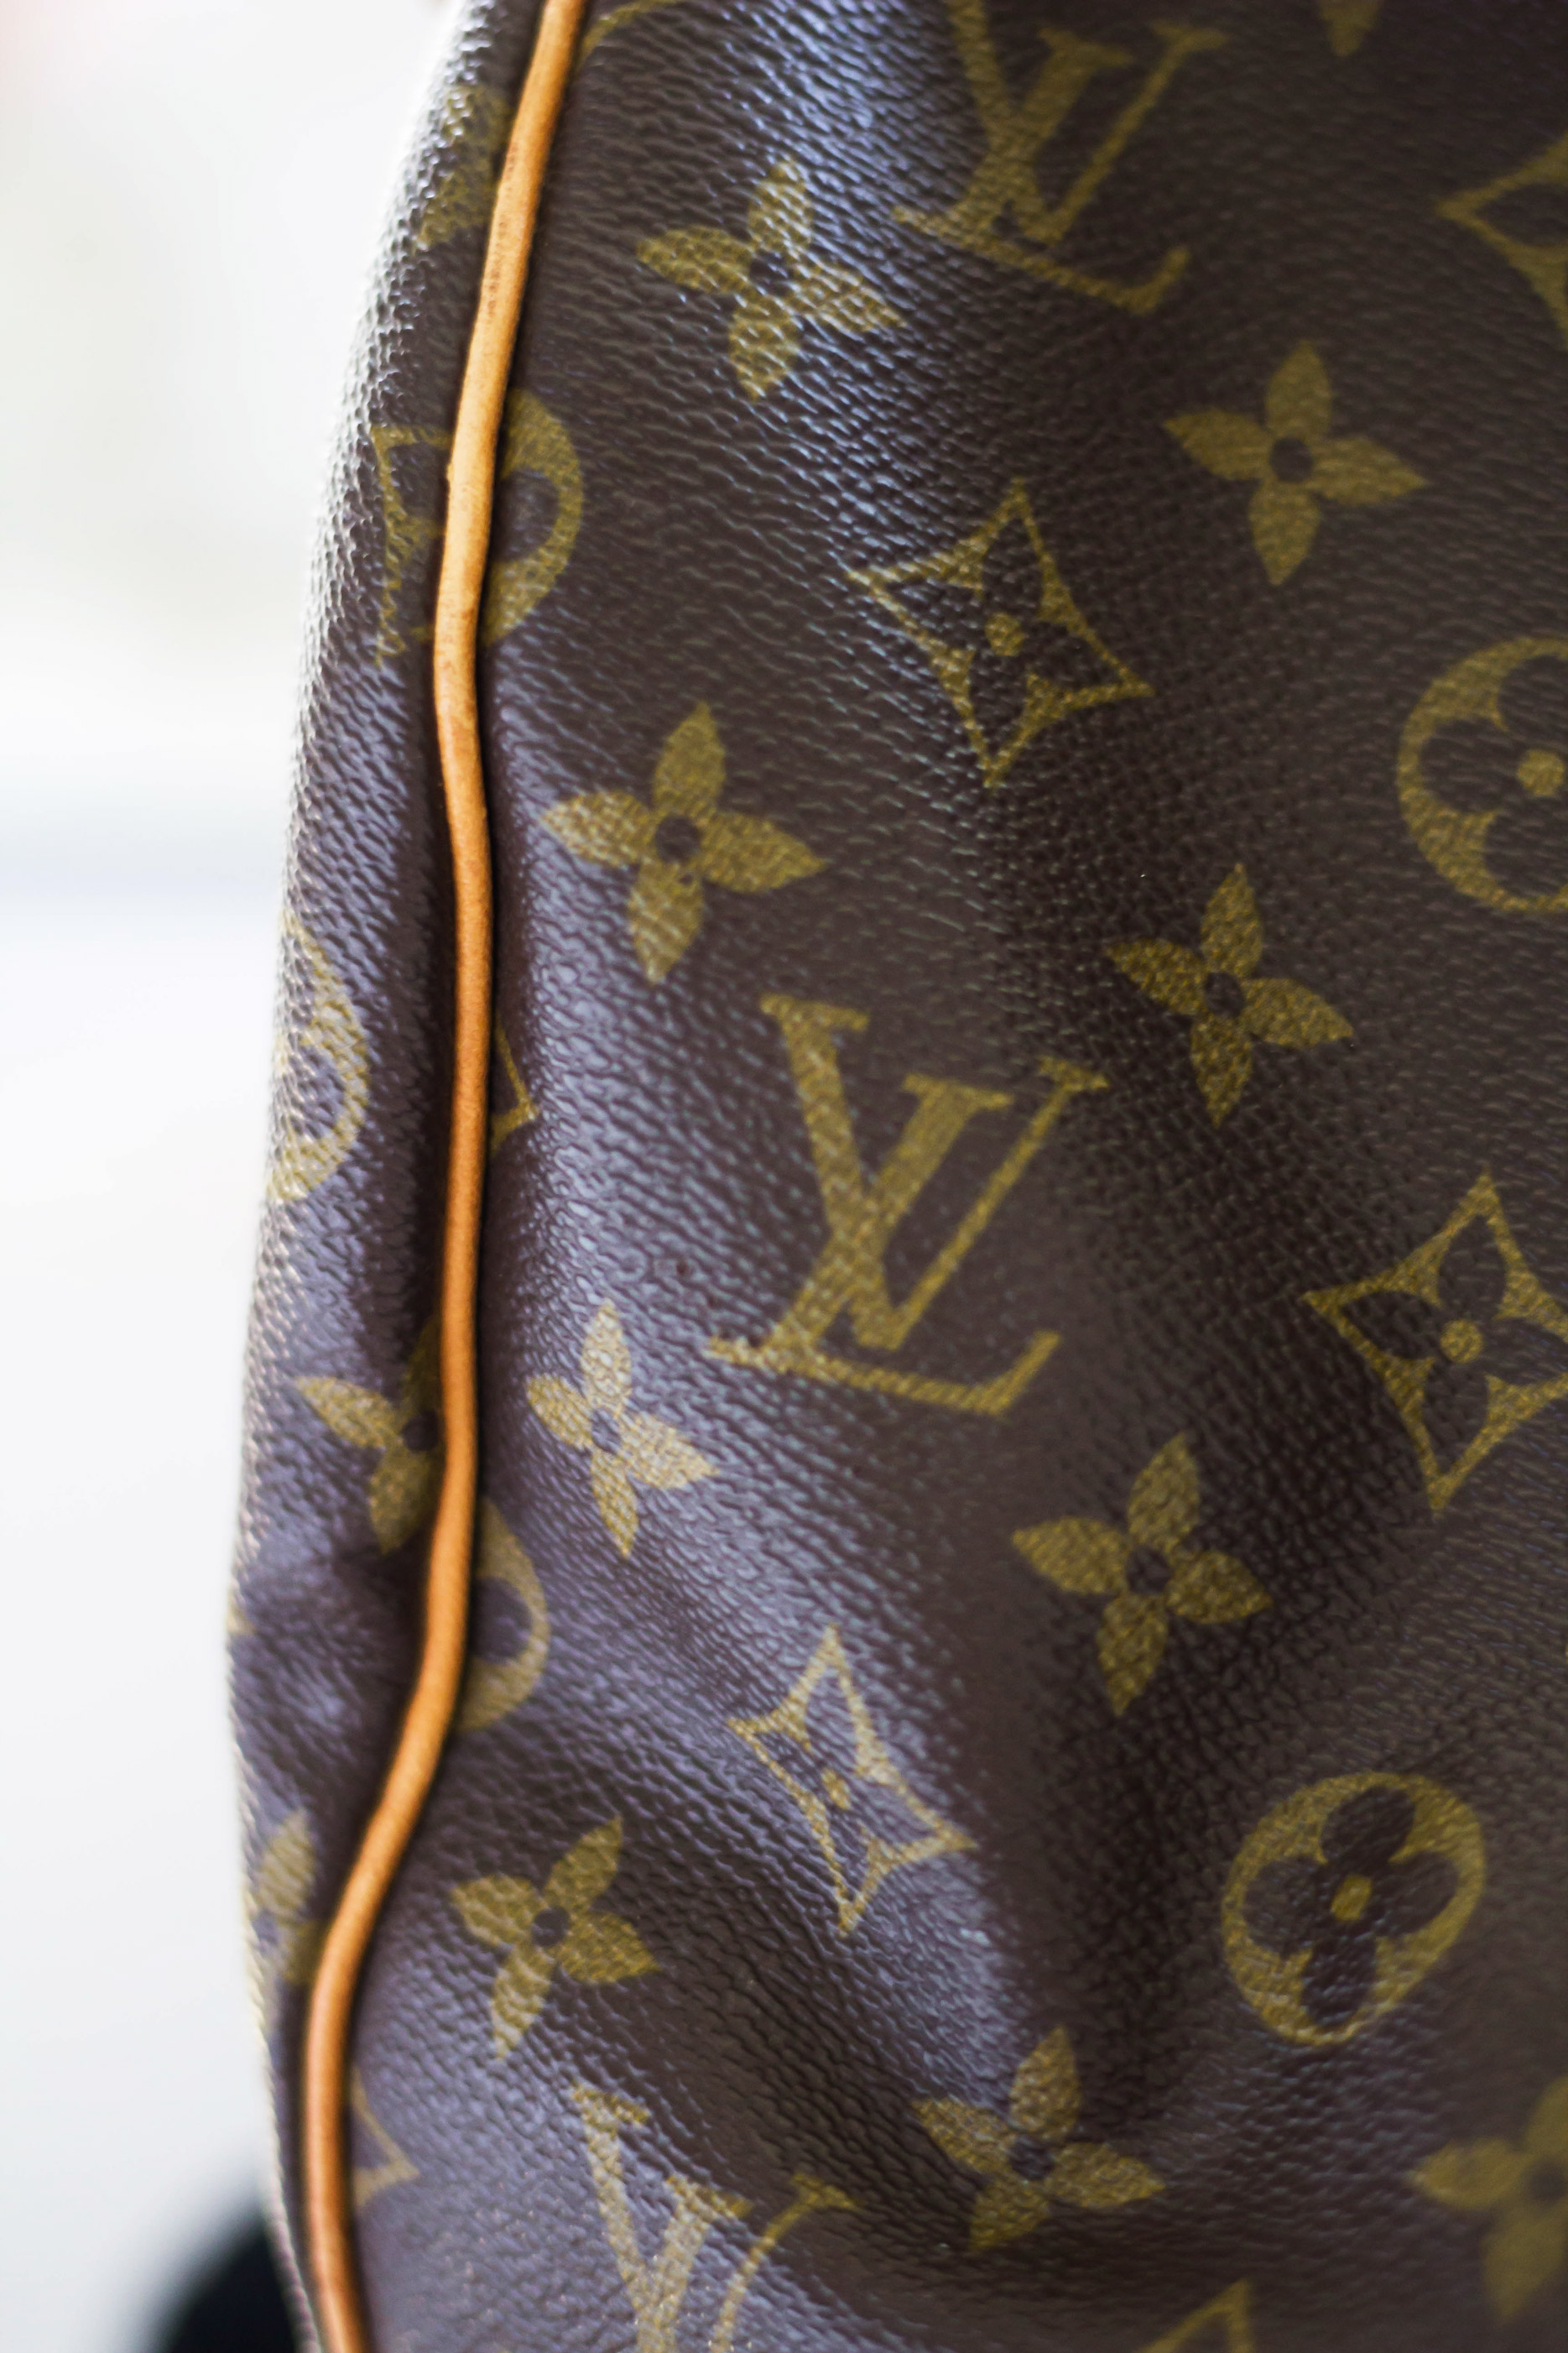 Buying Louis Vuitton Handbags on Poshmark